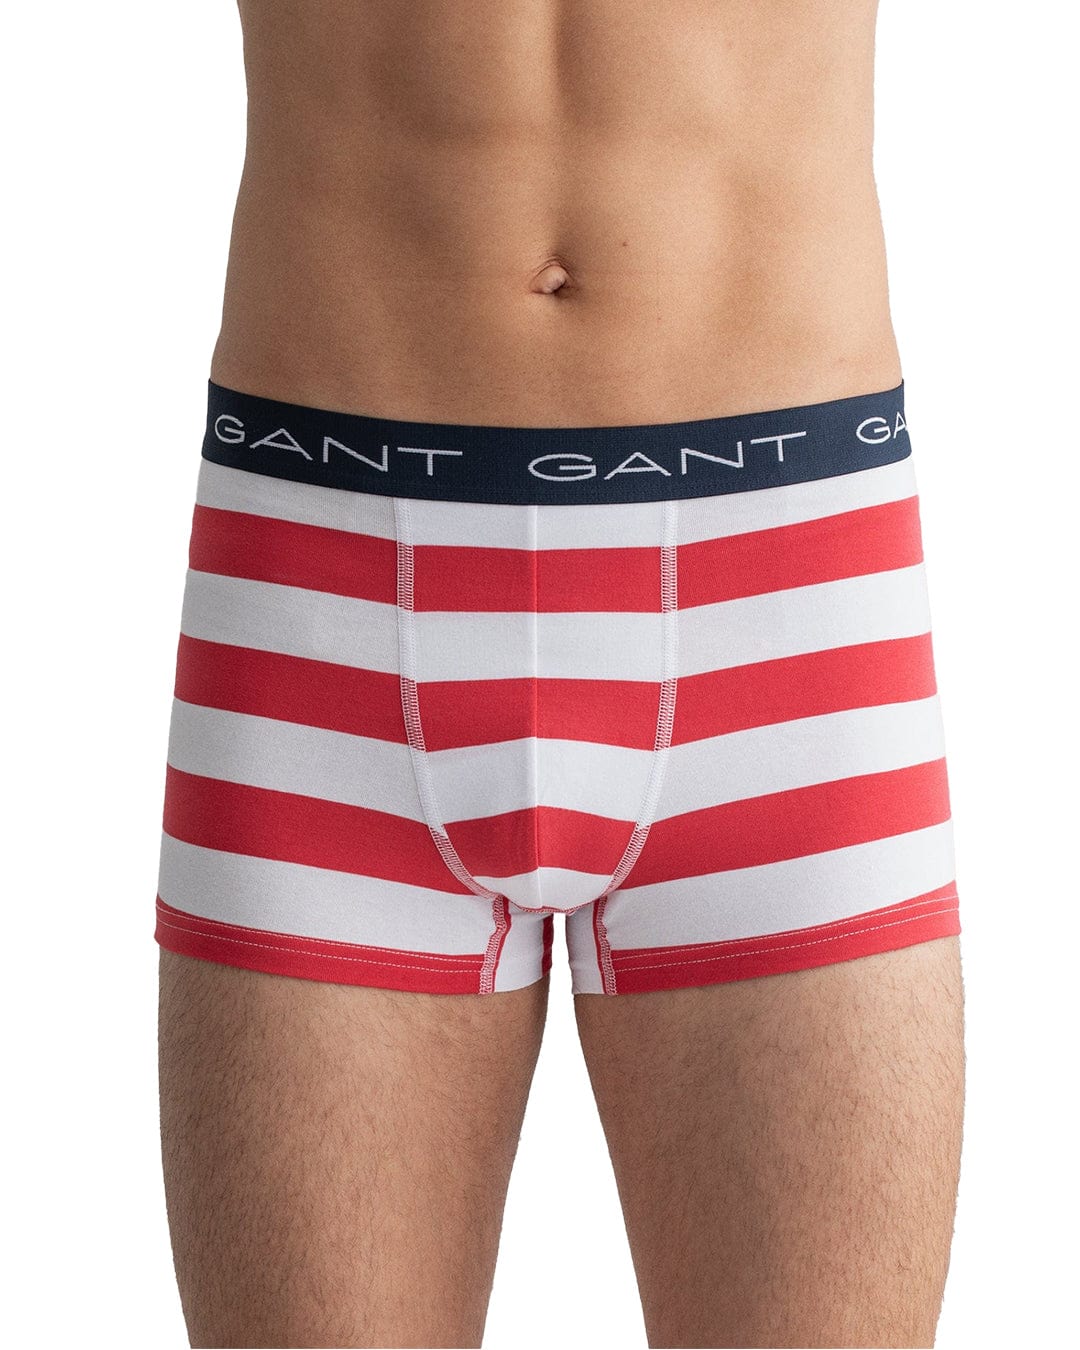 Gant Underwear Gant Red And Navy Rugby Striped Three-Pack Trunks